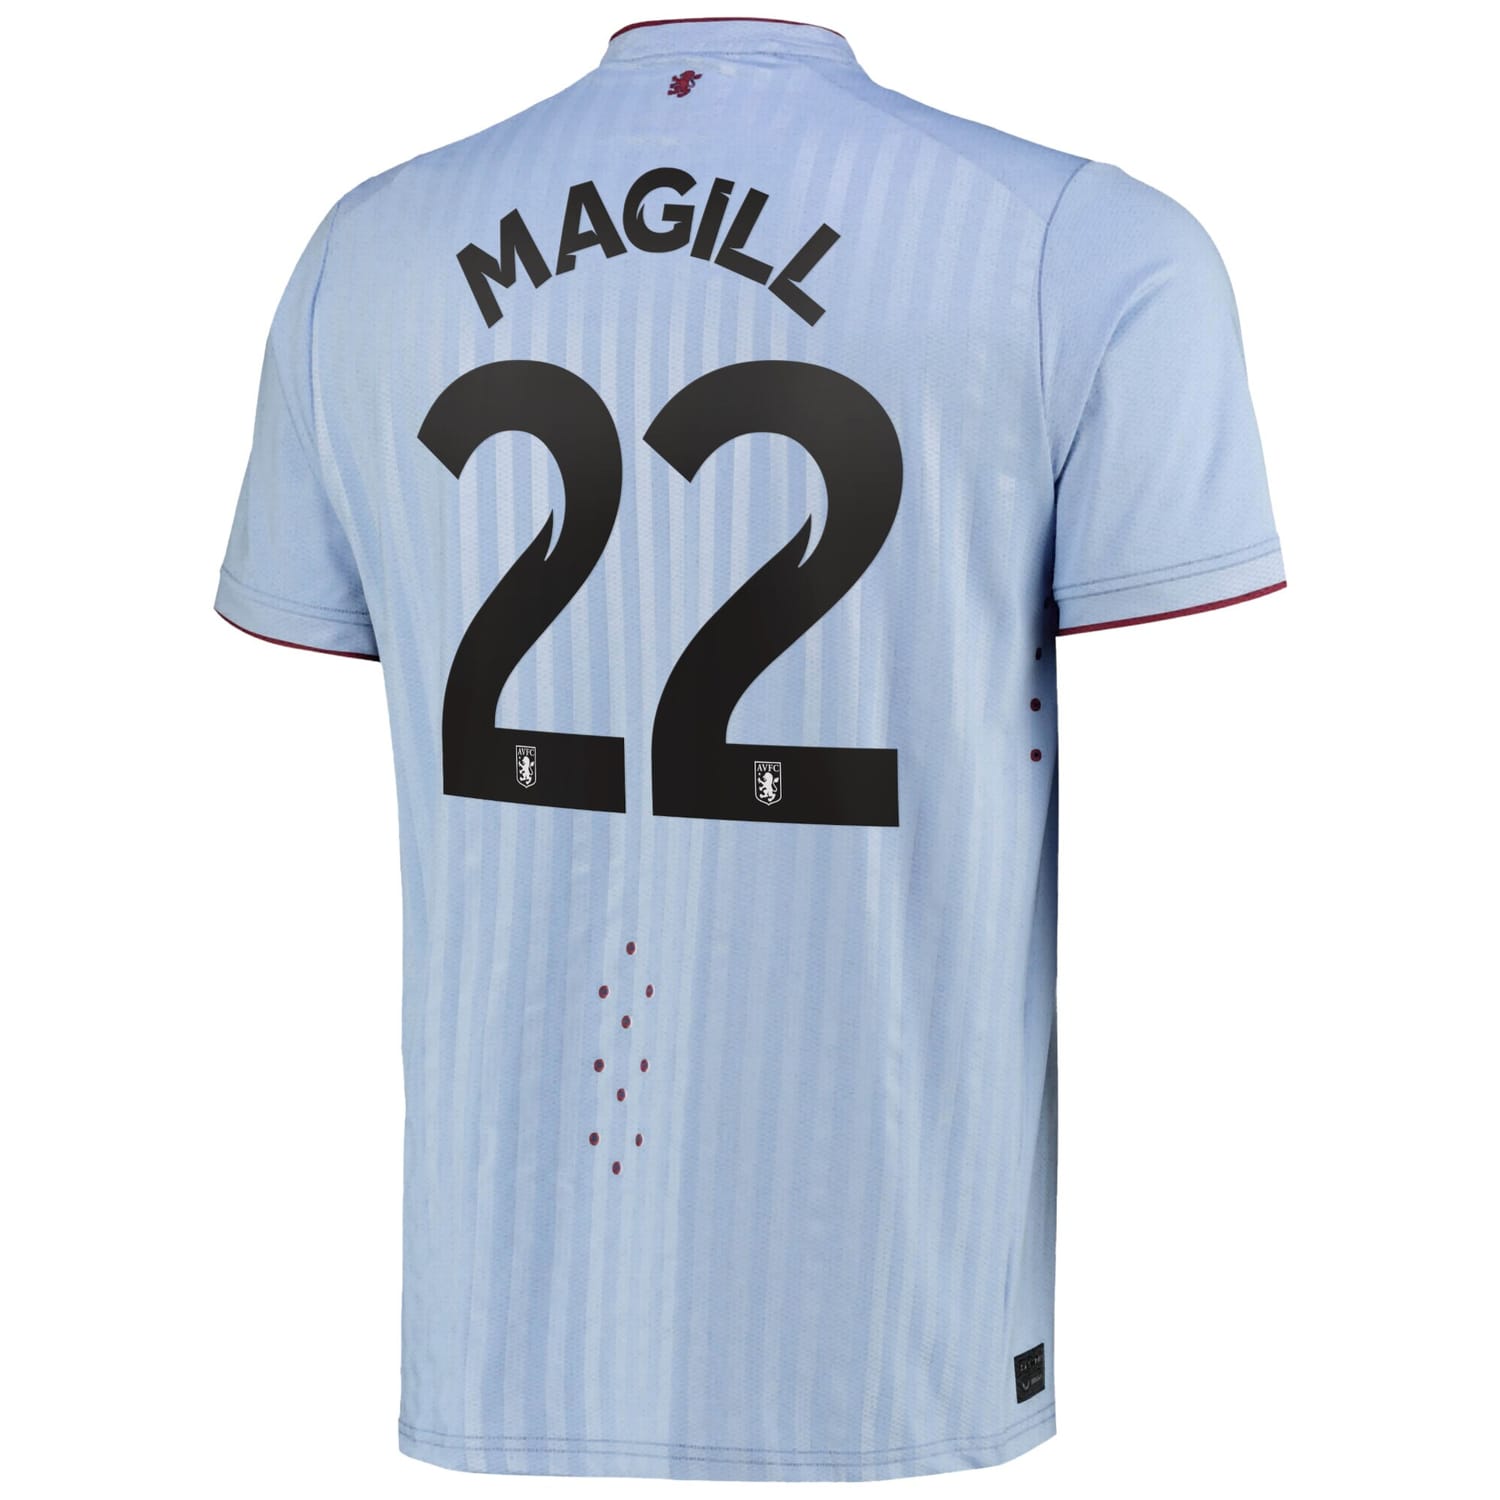 Premier League Aston Villa Away Cup Pro Jersey Shirt 2022-23 player Simone Magill 22 printing for Men